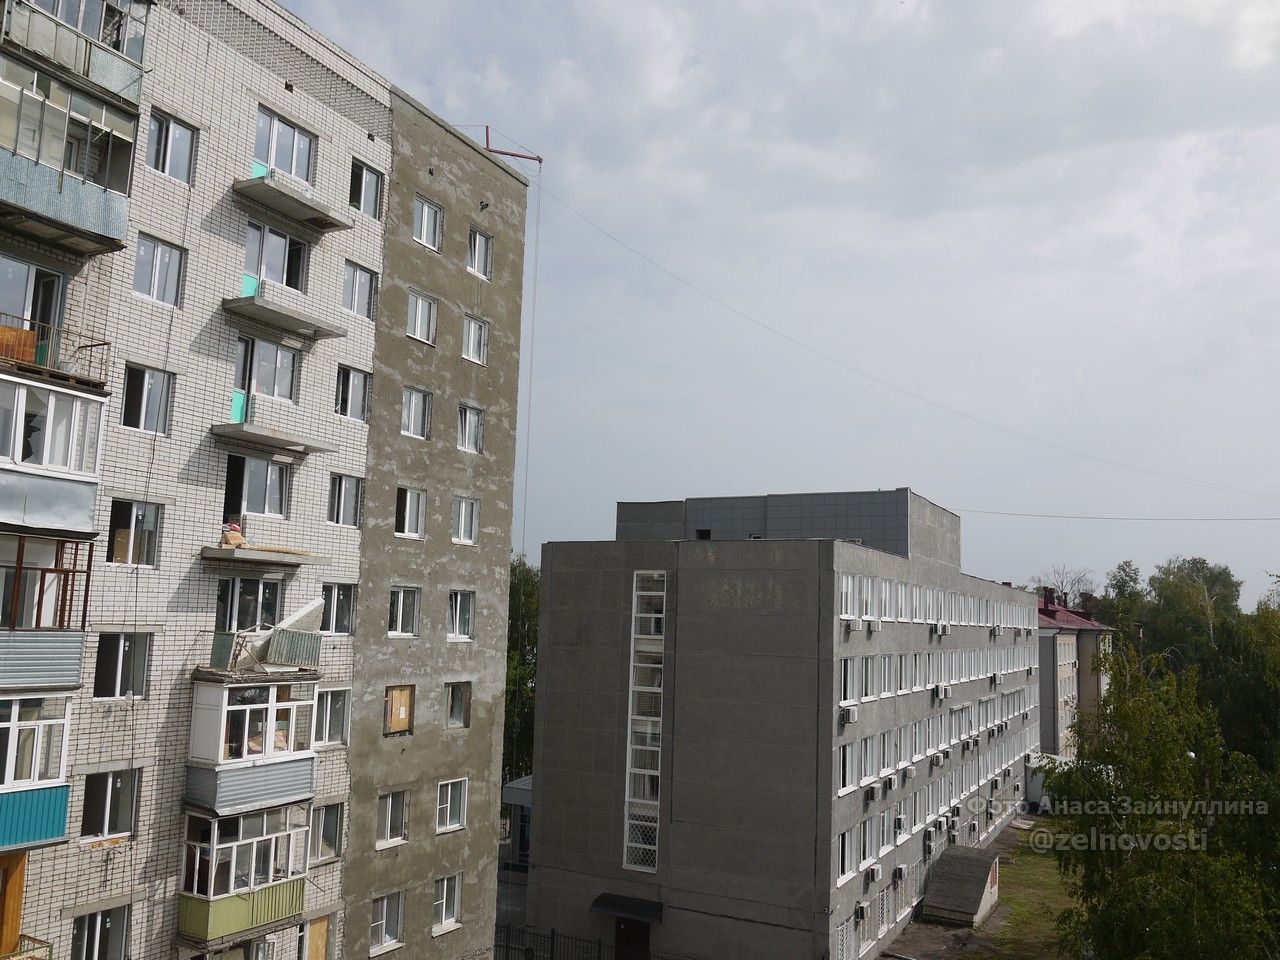 Фасад дома № 39-а по улице Ленина приобретает новую штукатурку